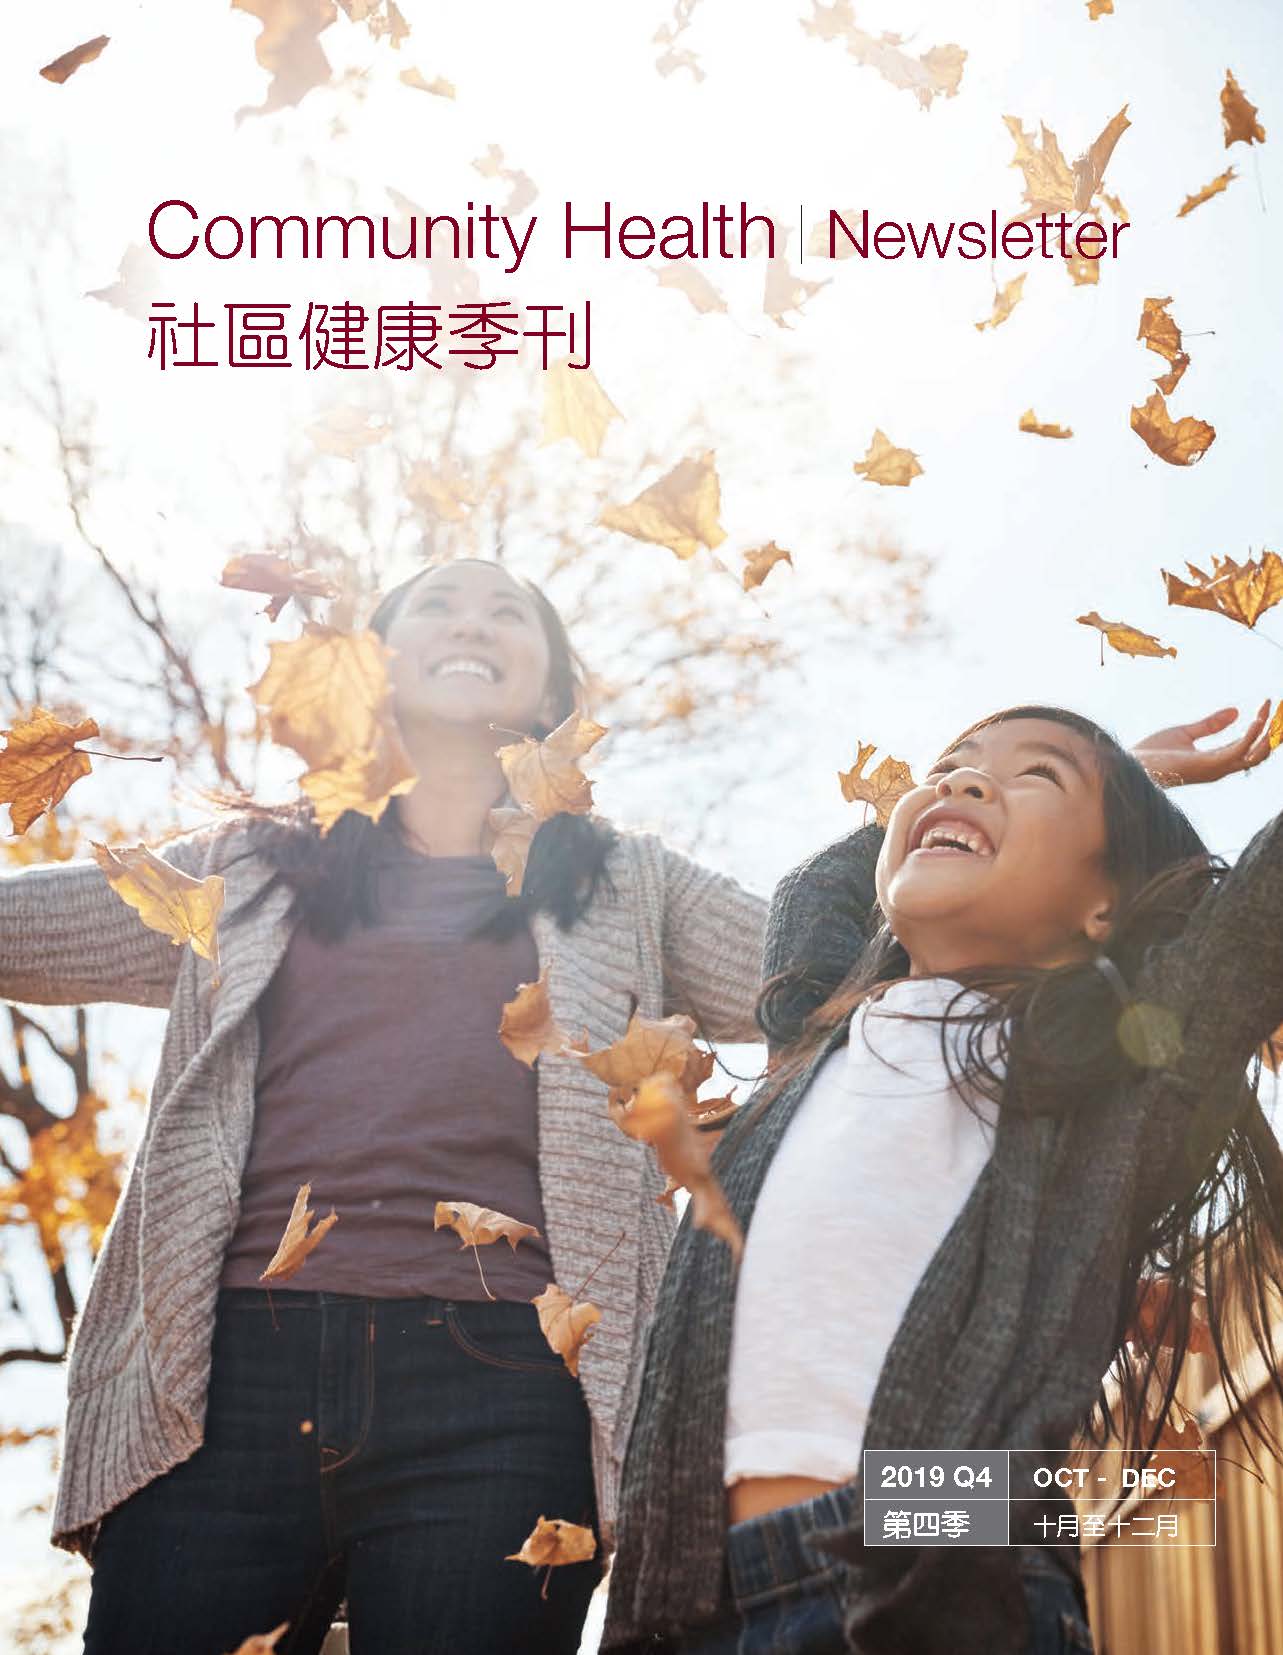 CCHP 2019 q4 newsletter, friends enjoying the fall season